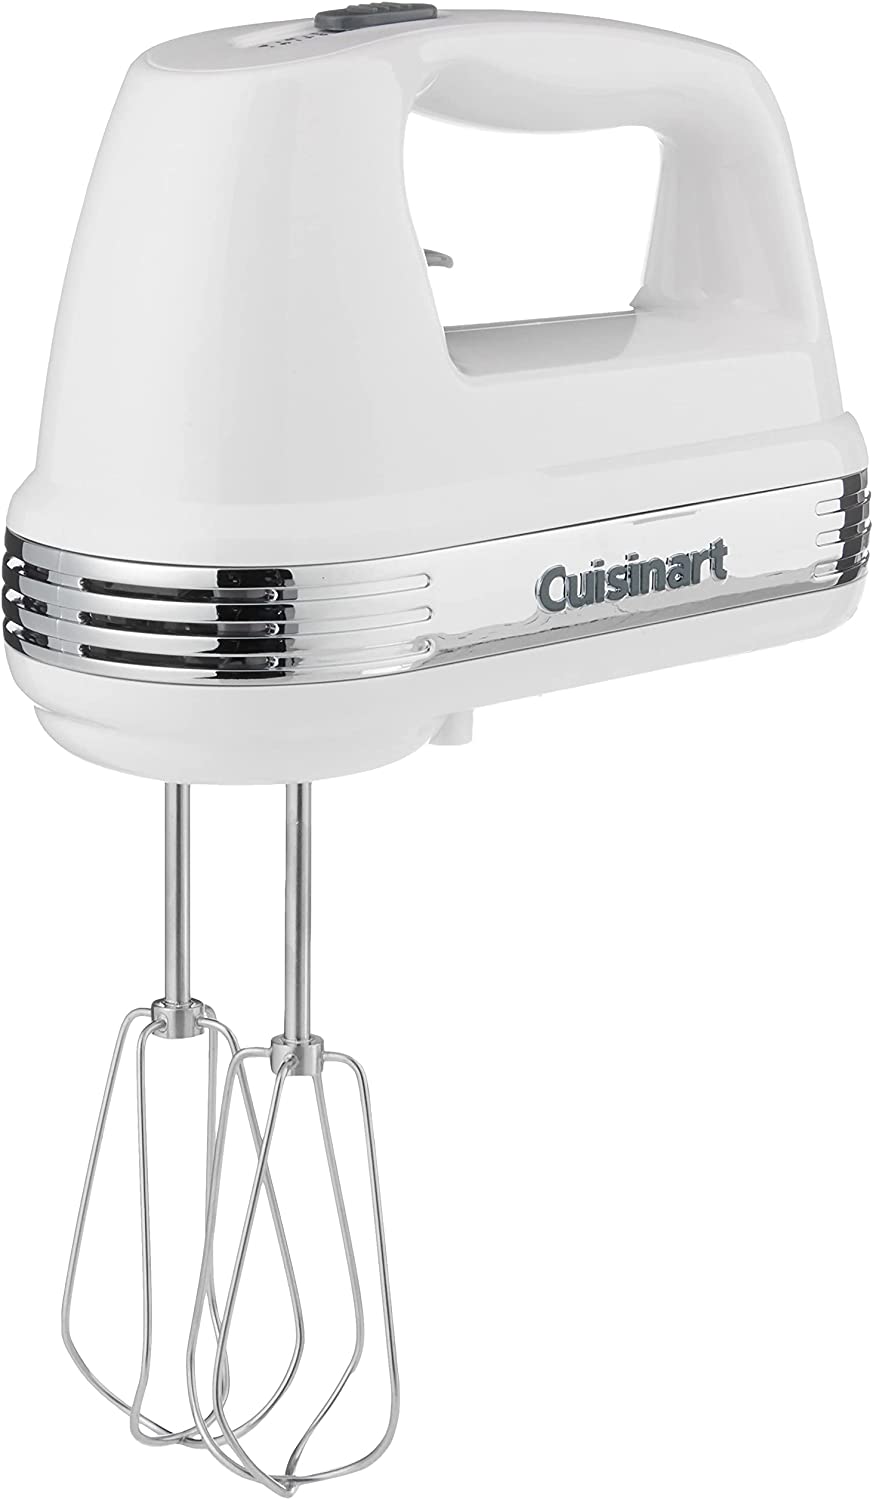 Cuisinart HM-50 Power Advantage 5 Speed Hand Mixer White - Certified Refurbished